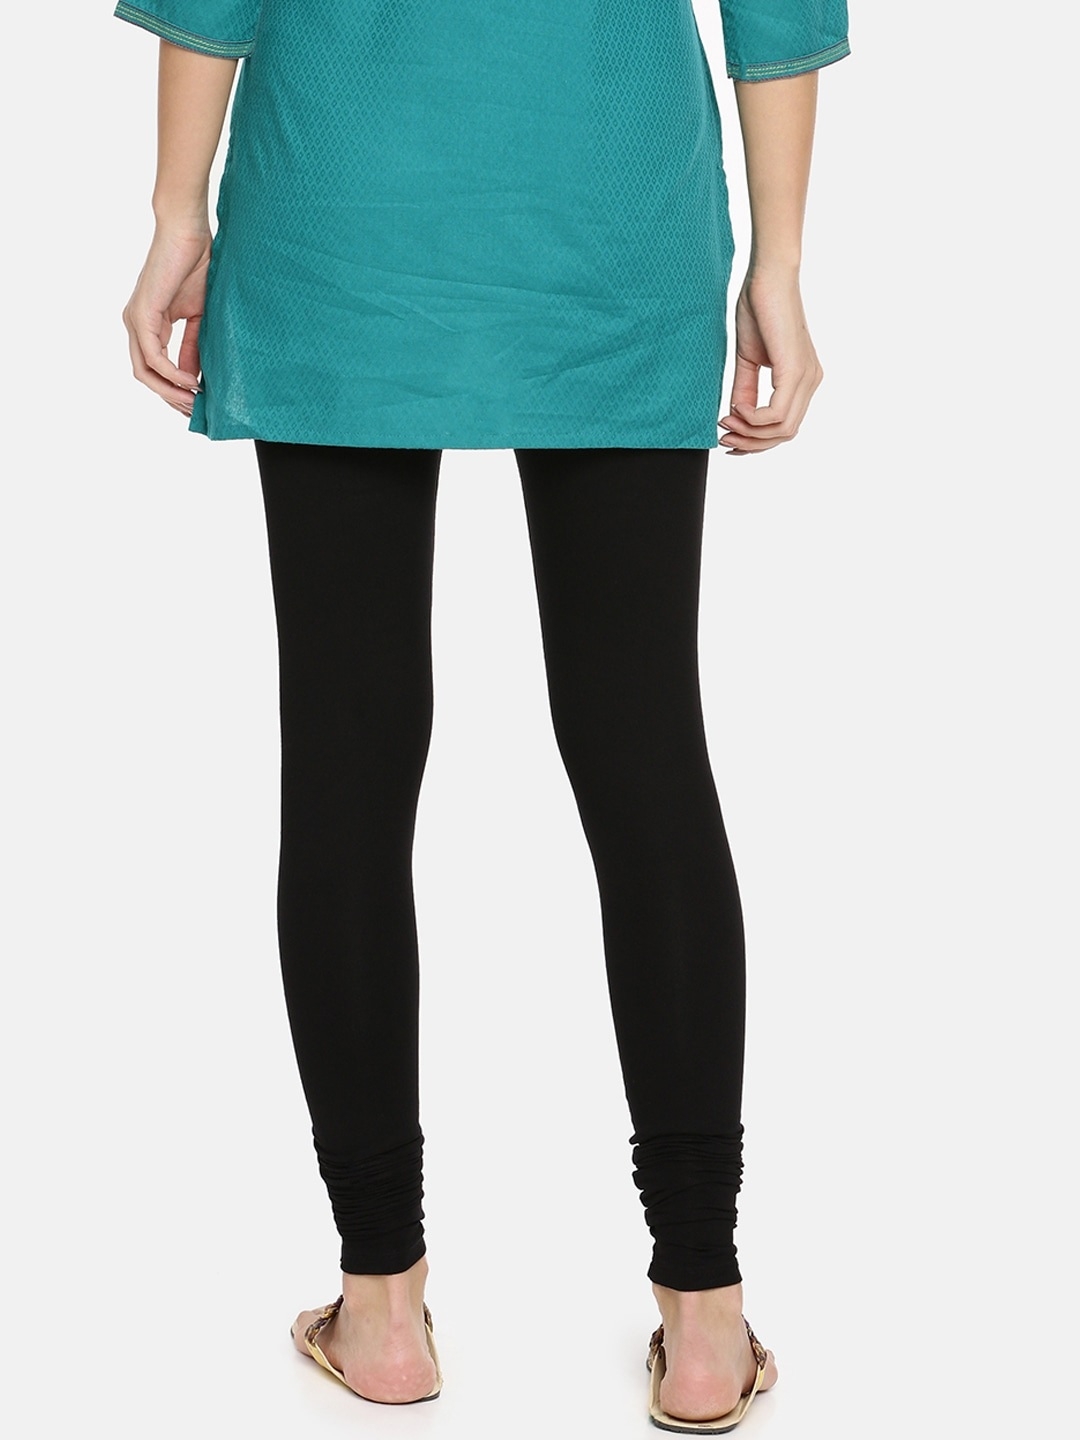 Shosho Girl's Fleece Lined Leggings/twin Pack/size S/M Black And Green |  eBay